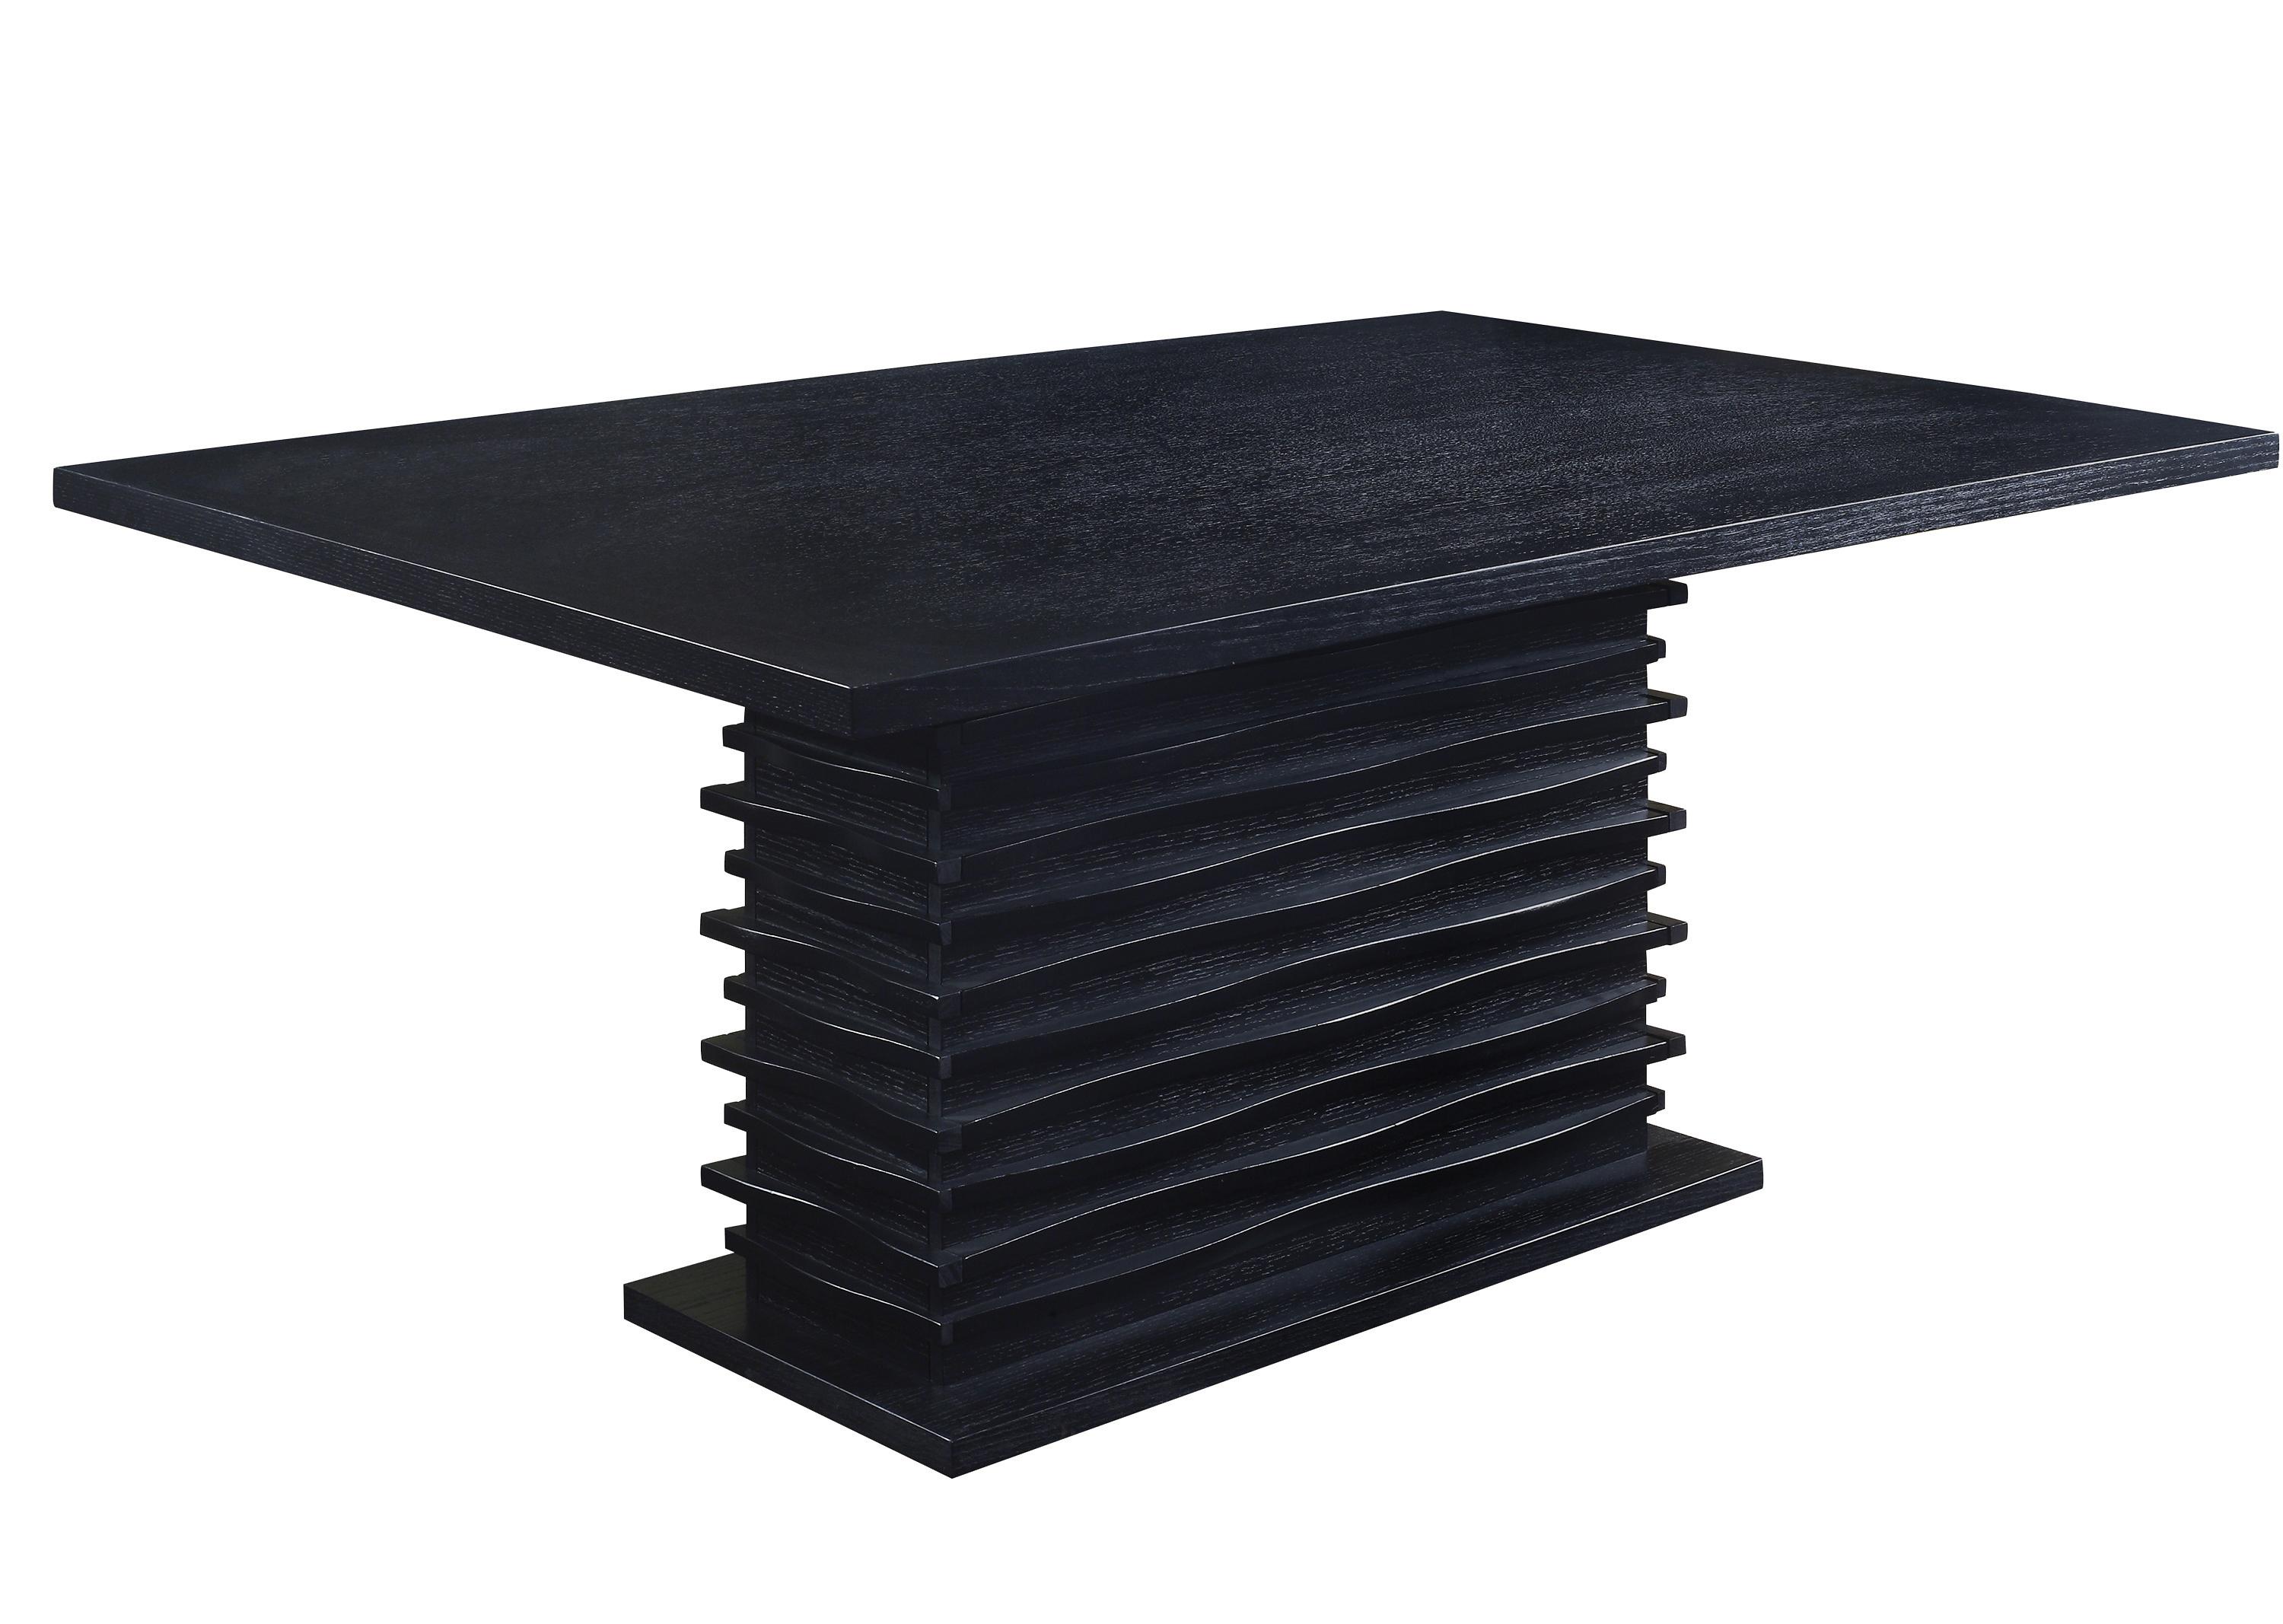 

    
Modern Black & Gray Solid Wood Dining Room Set 8pcs Coaster 102061-S8 Stanton
